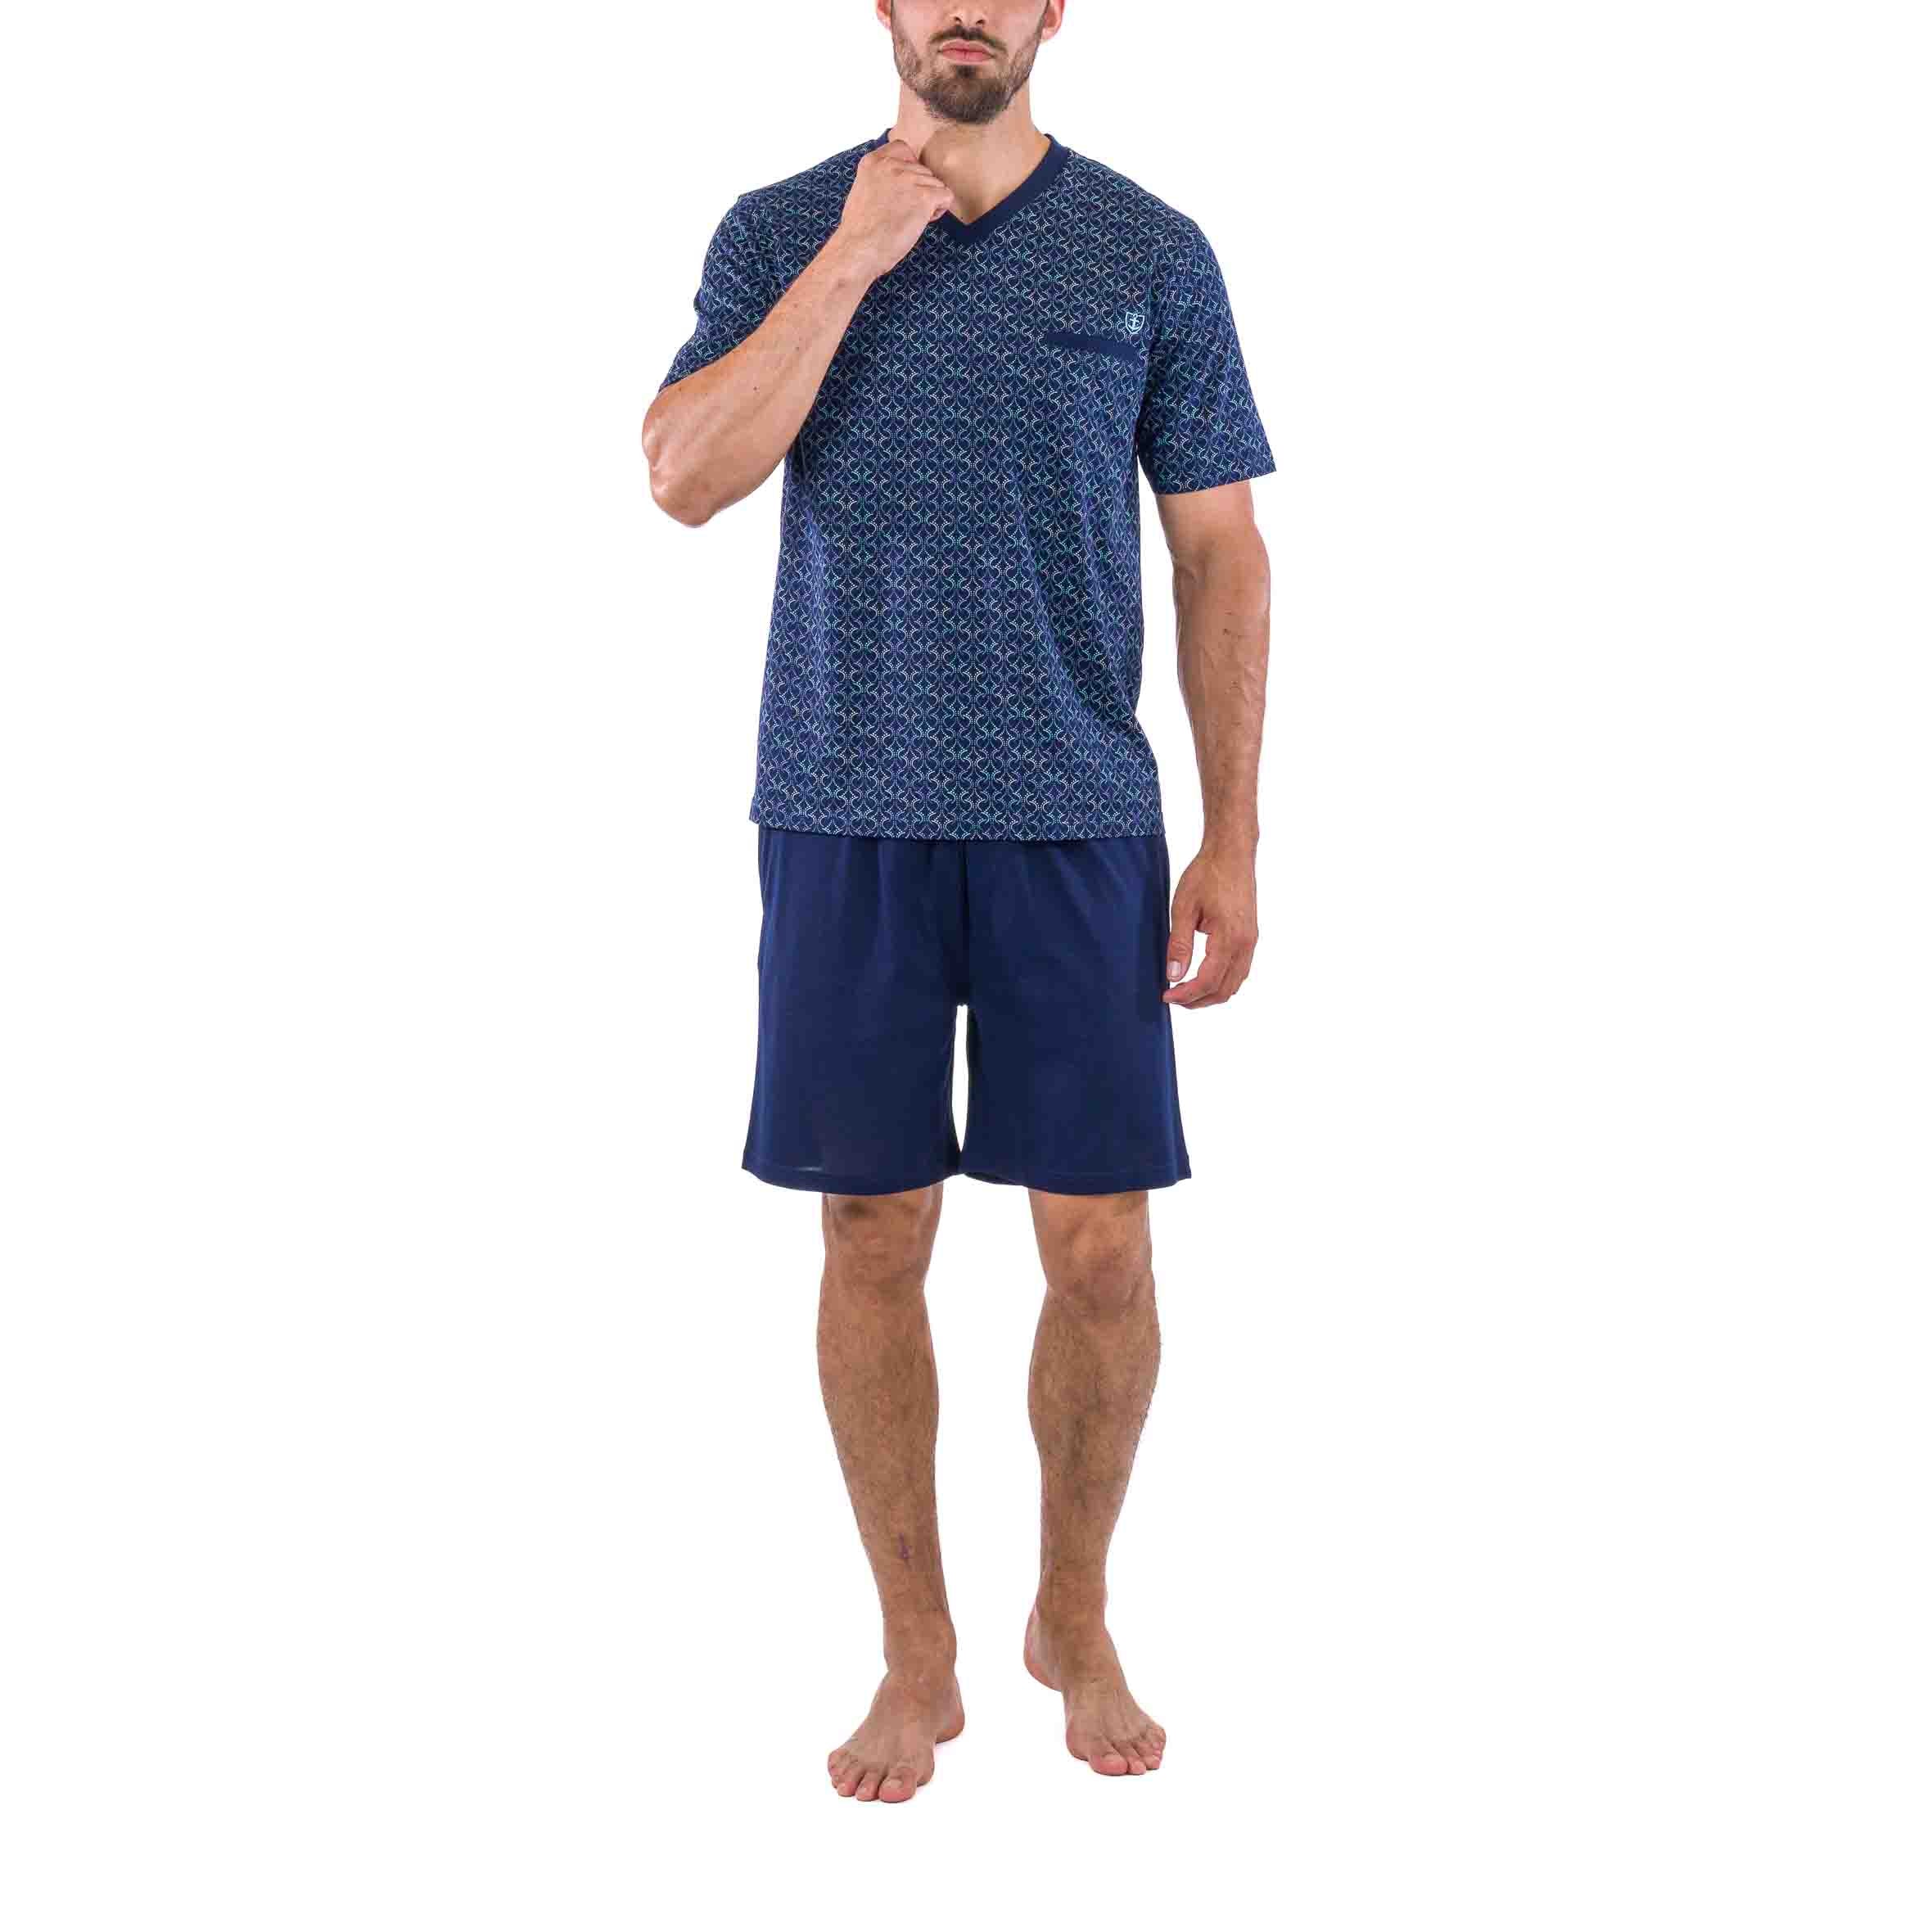 Short V-Neck Pajamas in Mercerized Cotton Jersey with Retro Print NAVY